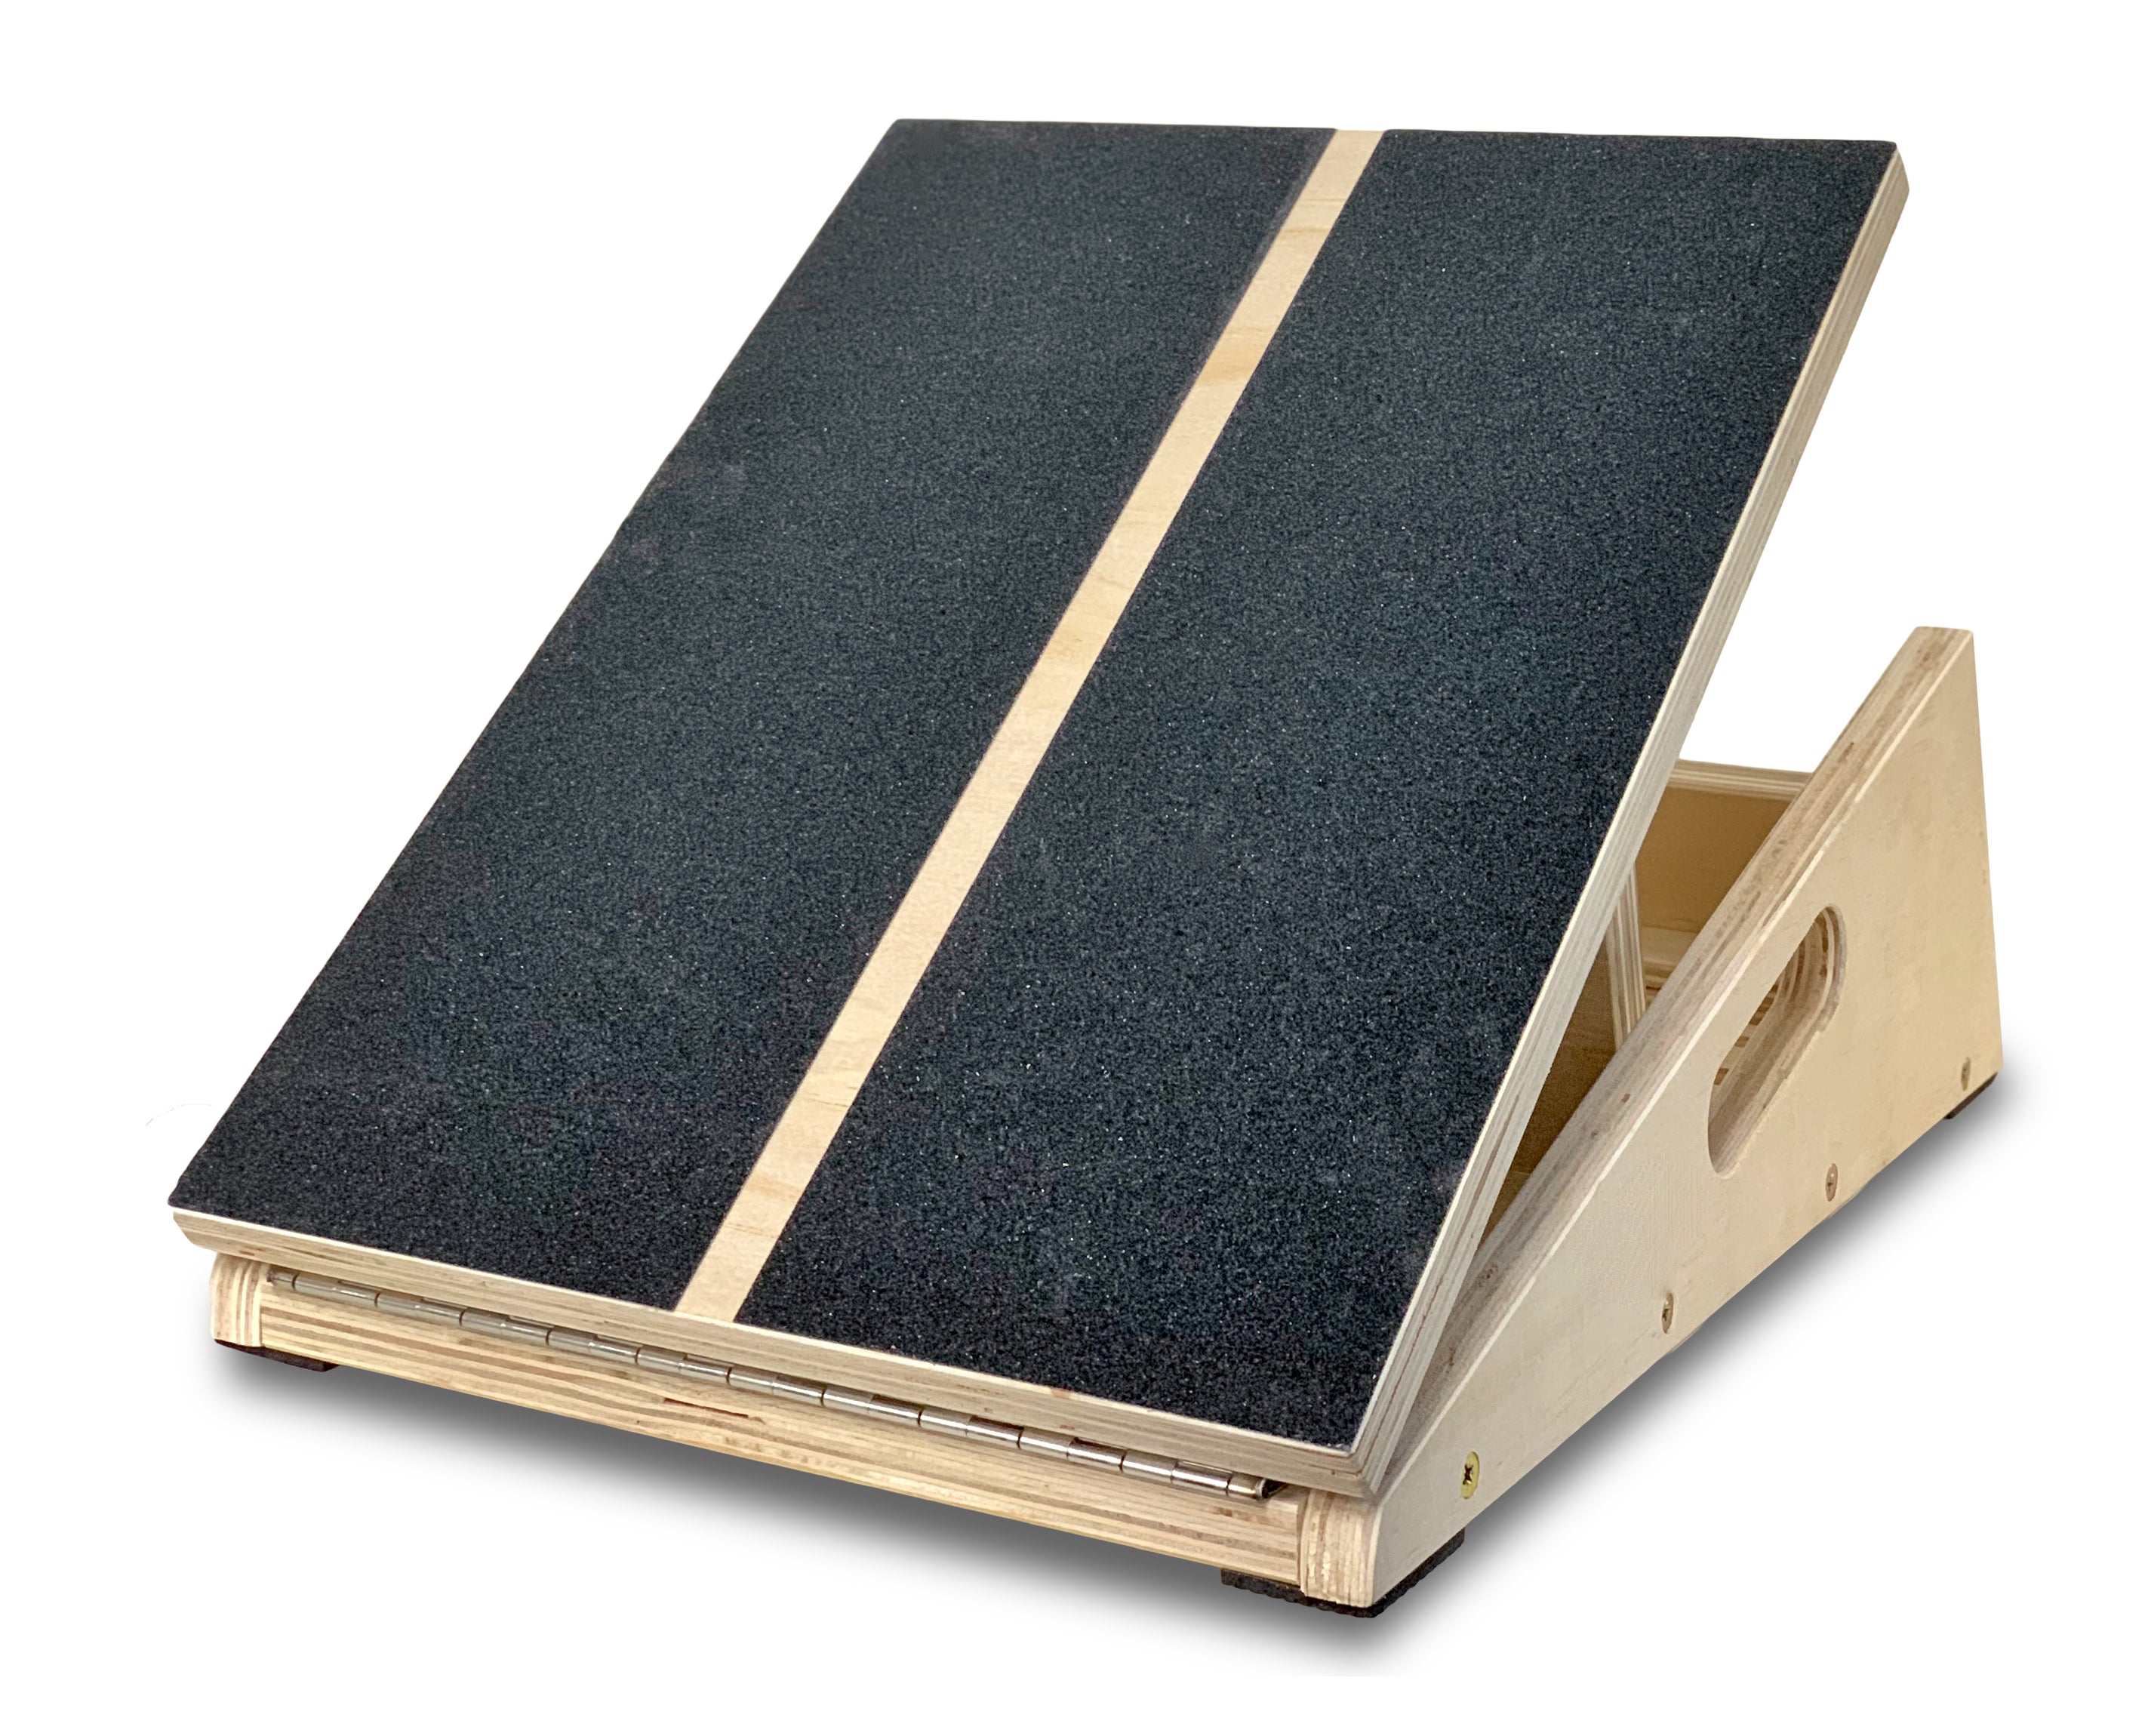 Wooden Slant Board, Adjustable Incline Board and Calf Stretcher, Stretch Board